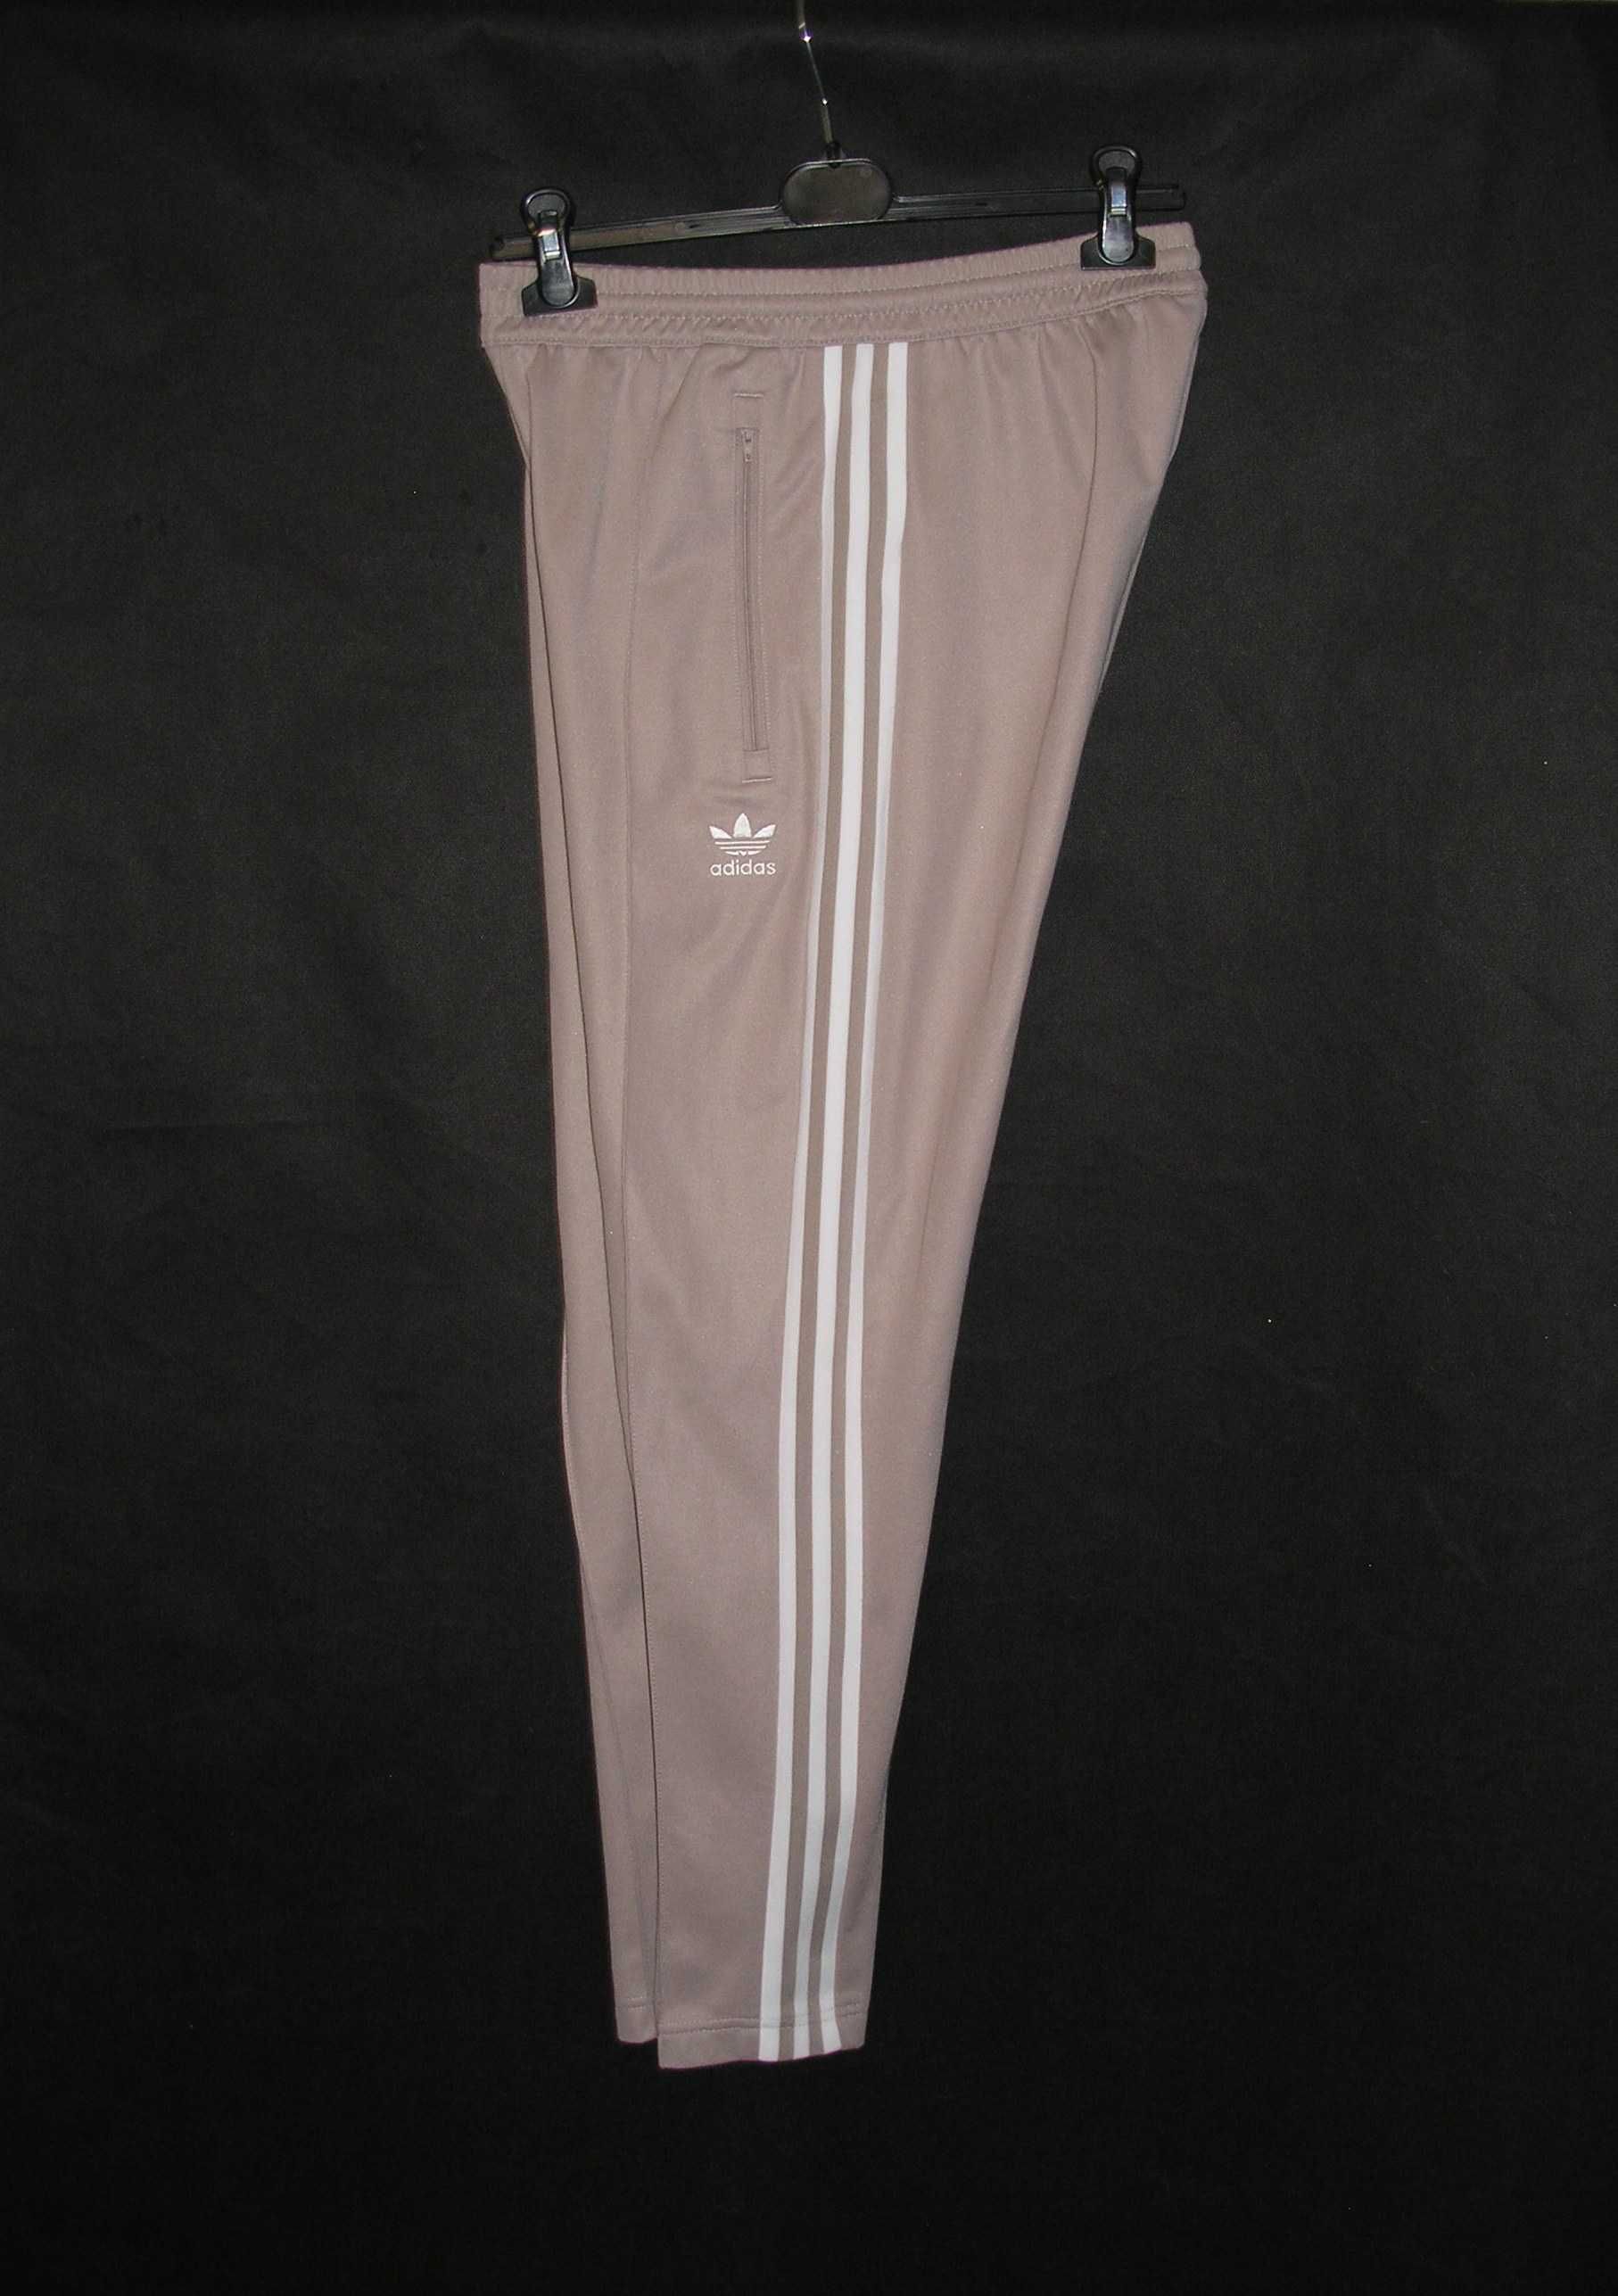 Мужские штаны Adidas originals Beckenbauer размер S